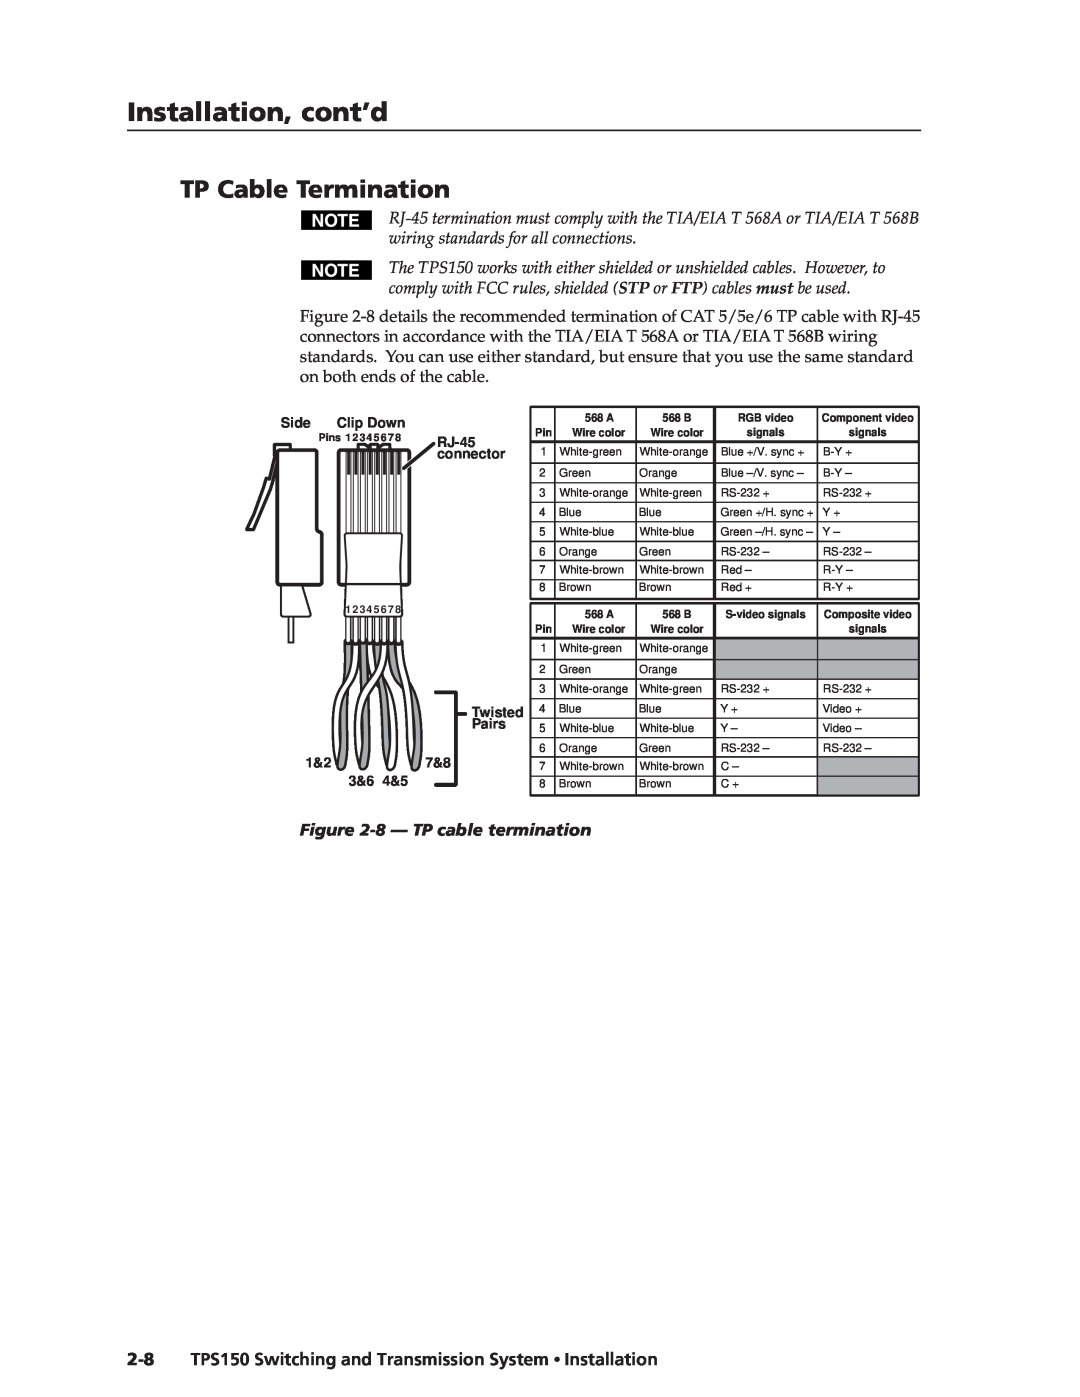 Extron electronic TPS150 TP Cable Termination, 8 - TP cable termination, Installation, cont’d, Side, Clip Down, RJ-45 